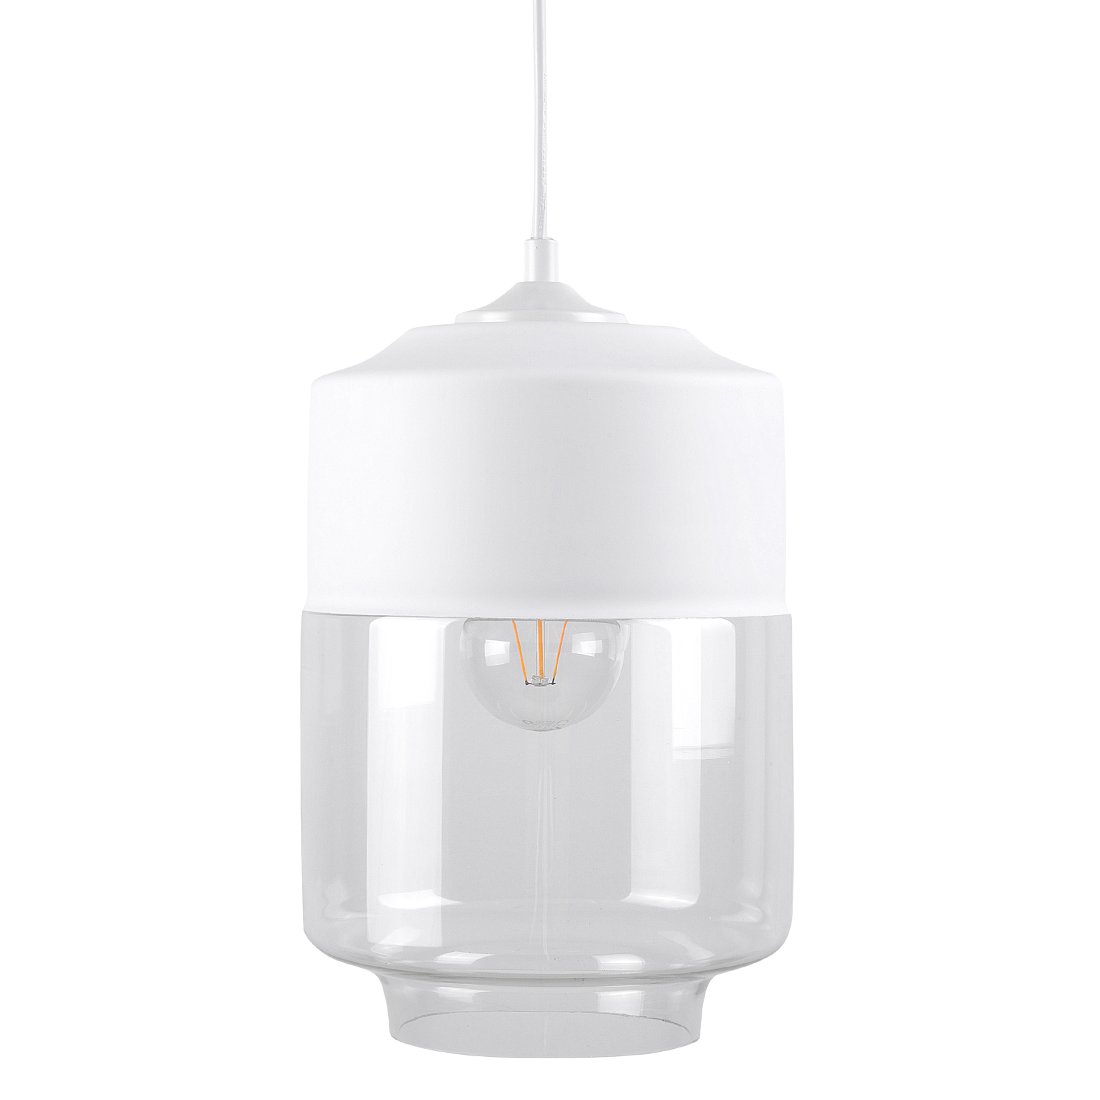 Beliani Hanging Light Pendant Lamp White Transparent Glass Shade Geometric Round Modern Design